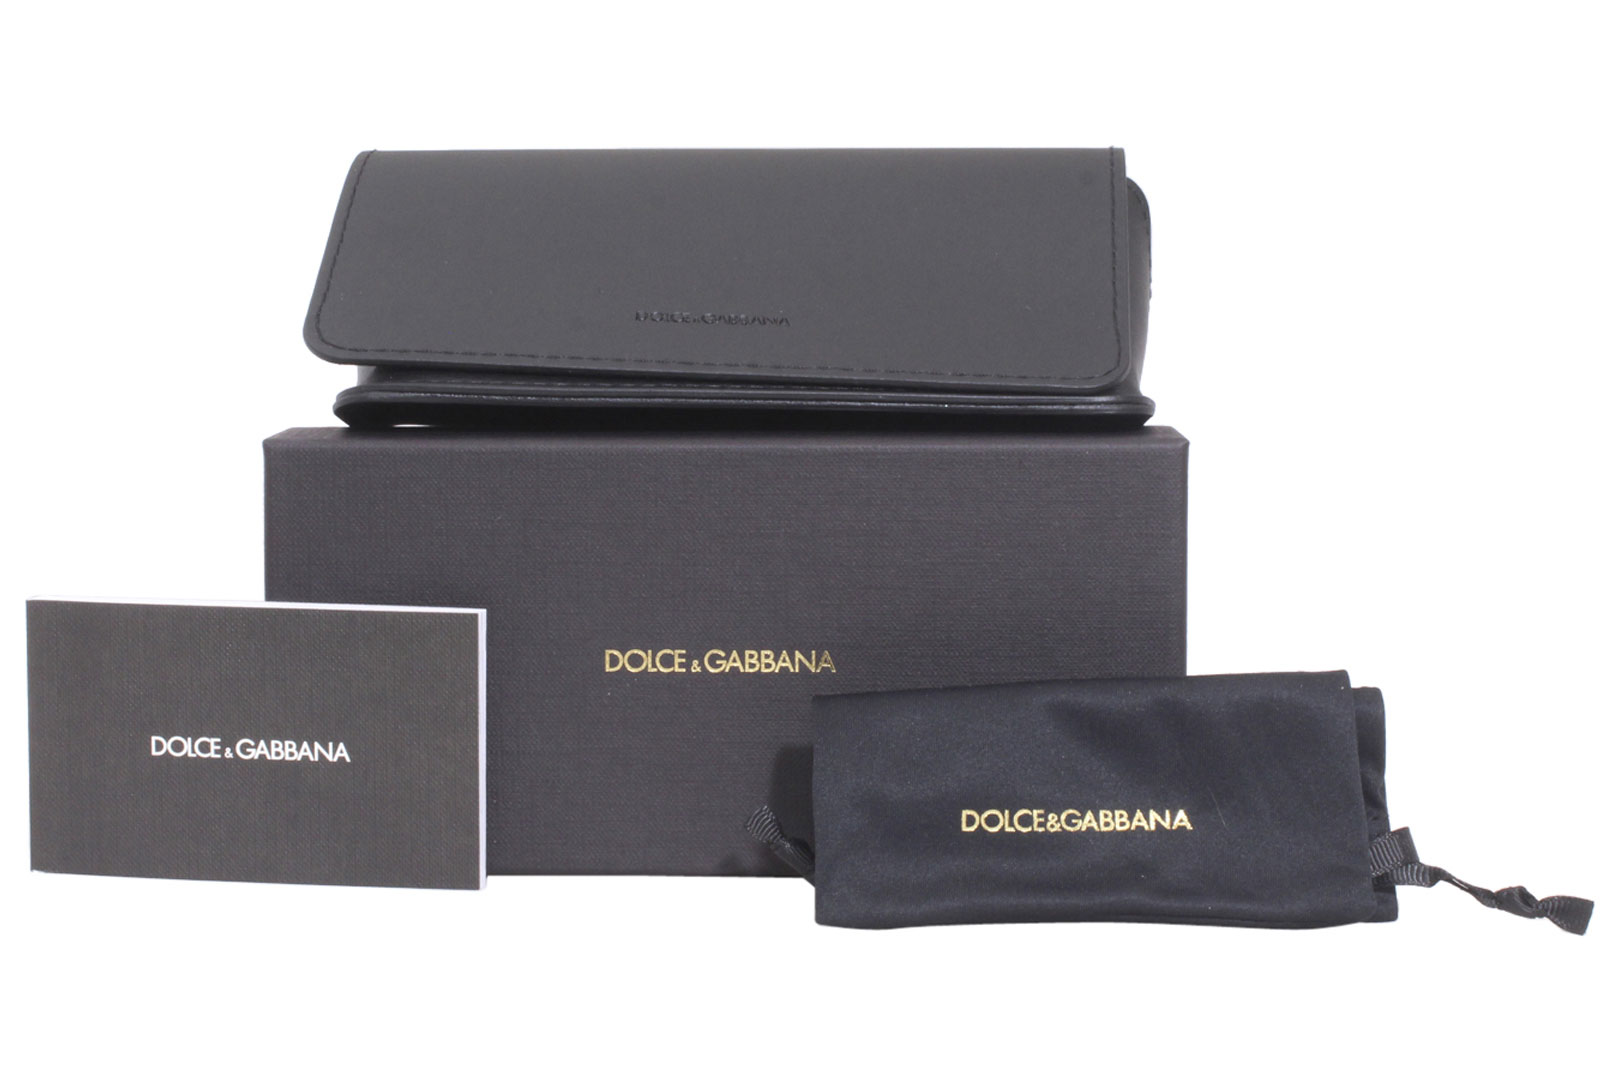 Dolce&Gabbana DG4403F 58 Dark Grey & Black Sunglasses